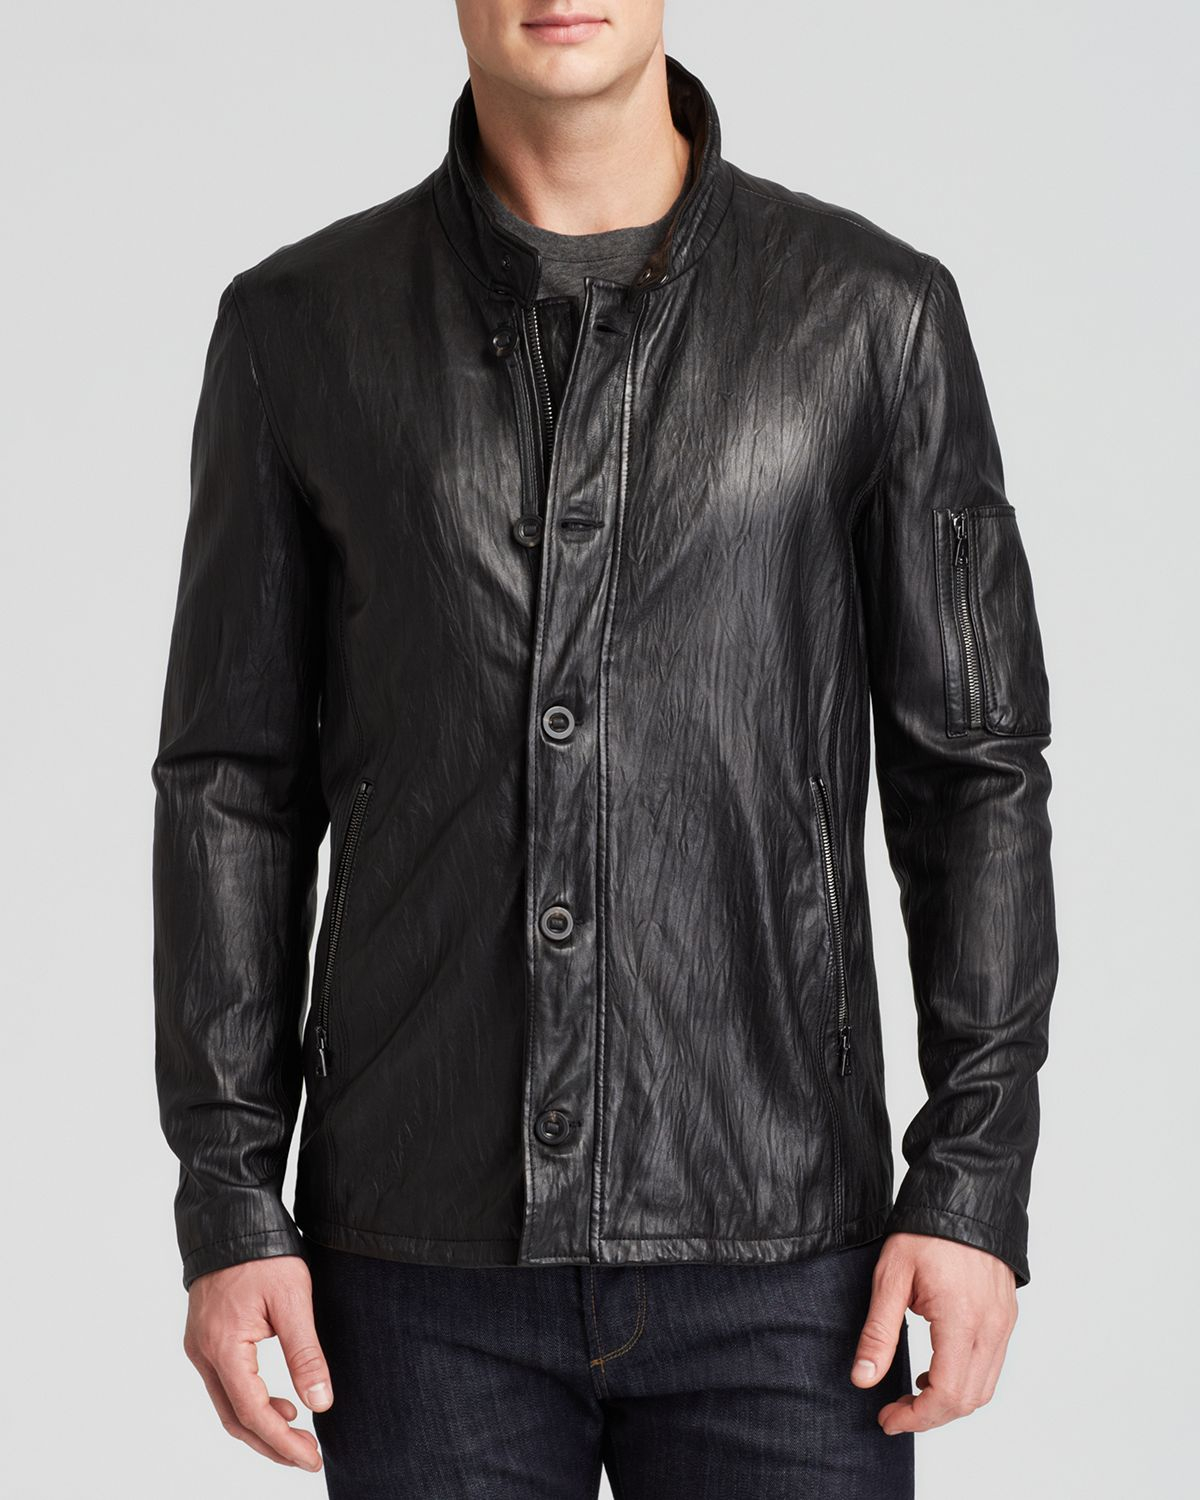 Lyst - John Varvatos Collection Crinkle Effect Leather Jacket in Black ...